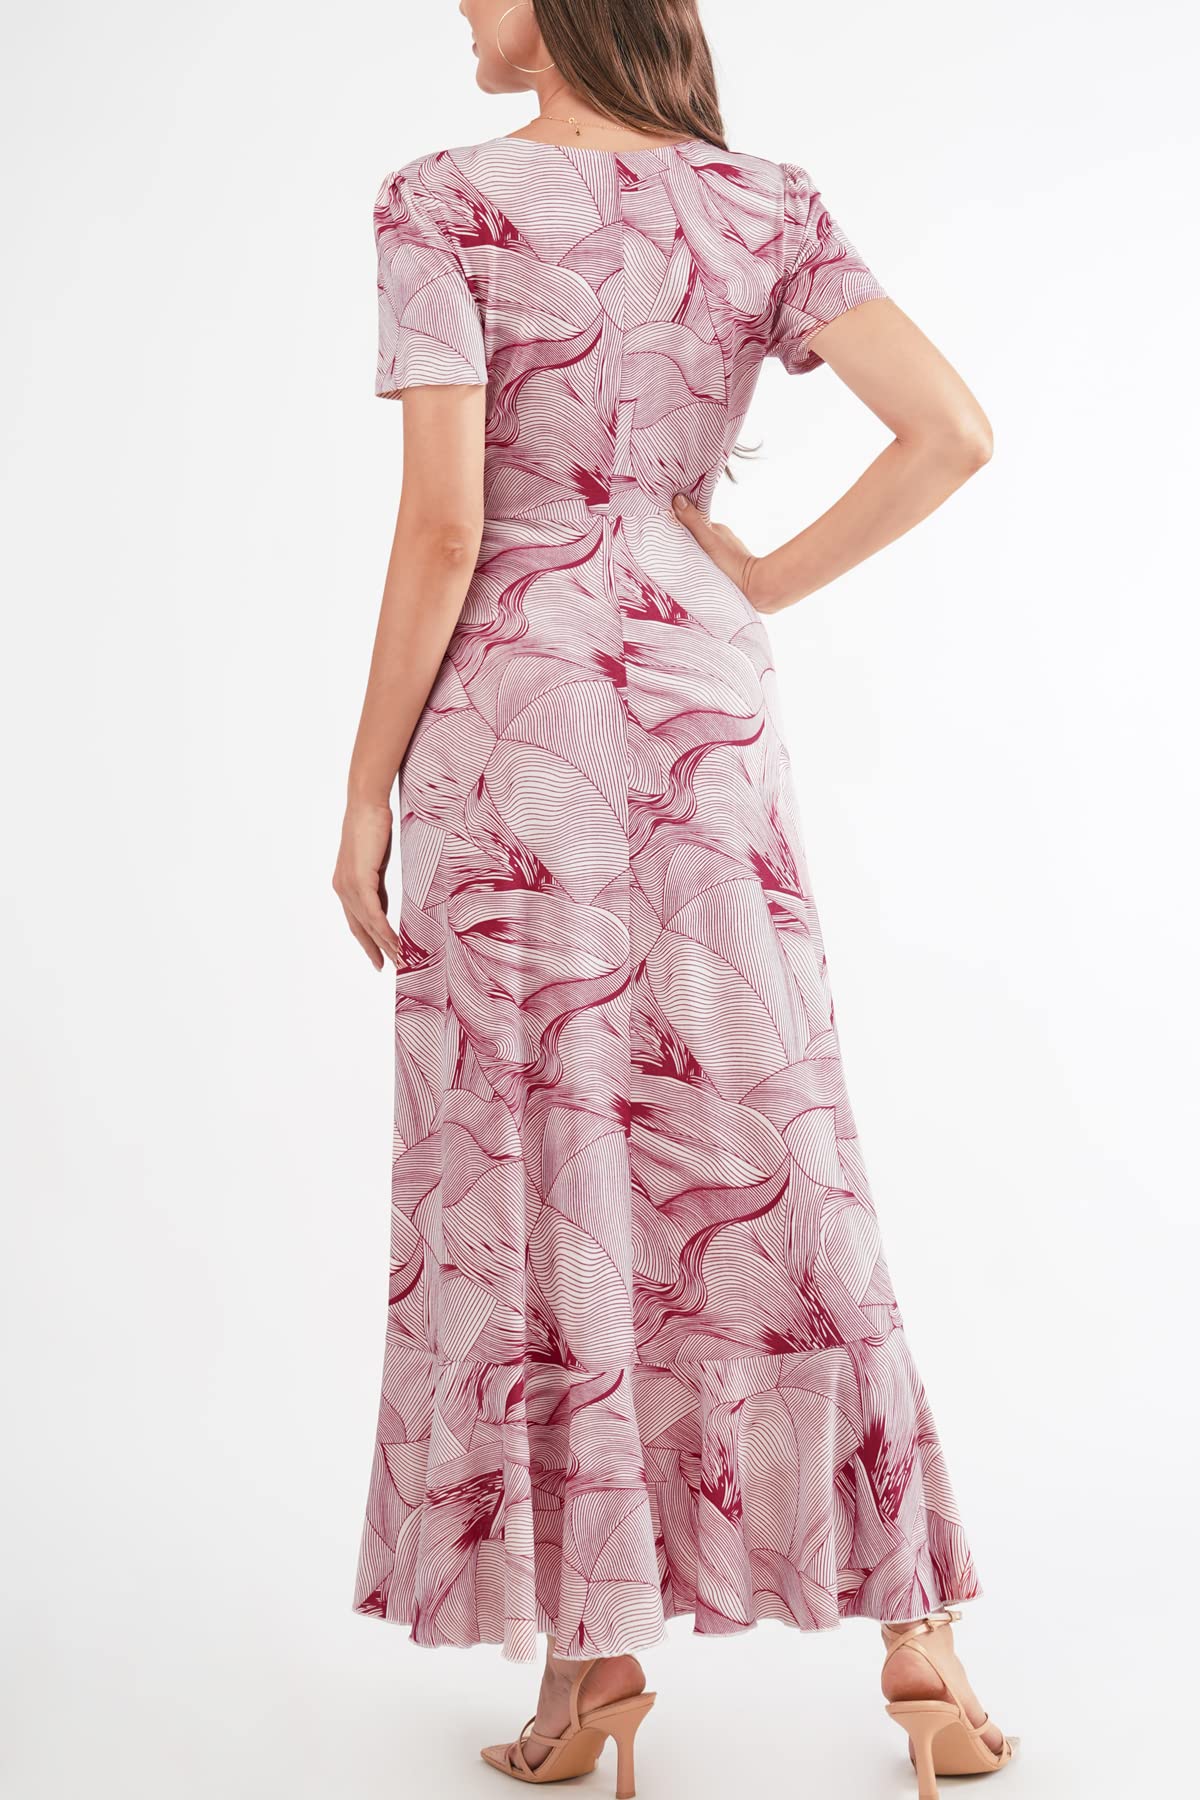 BAISHENGGT Womens Summer Short Sleeve Wrap V Neck Dress Pink Floral Print Ruffle Hem Bohemian Flowy Long Maxi Dresses